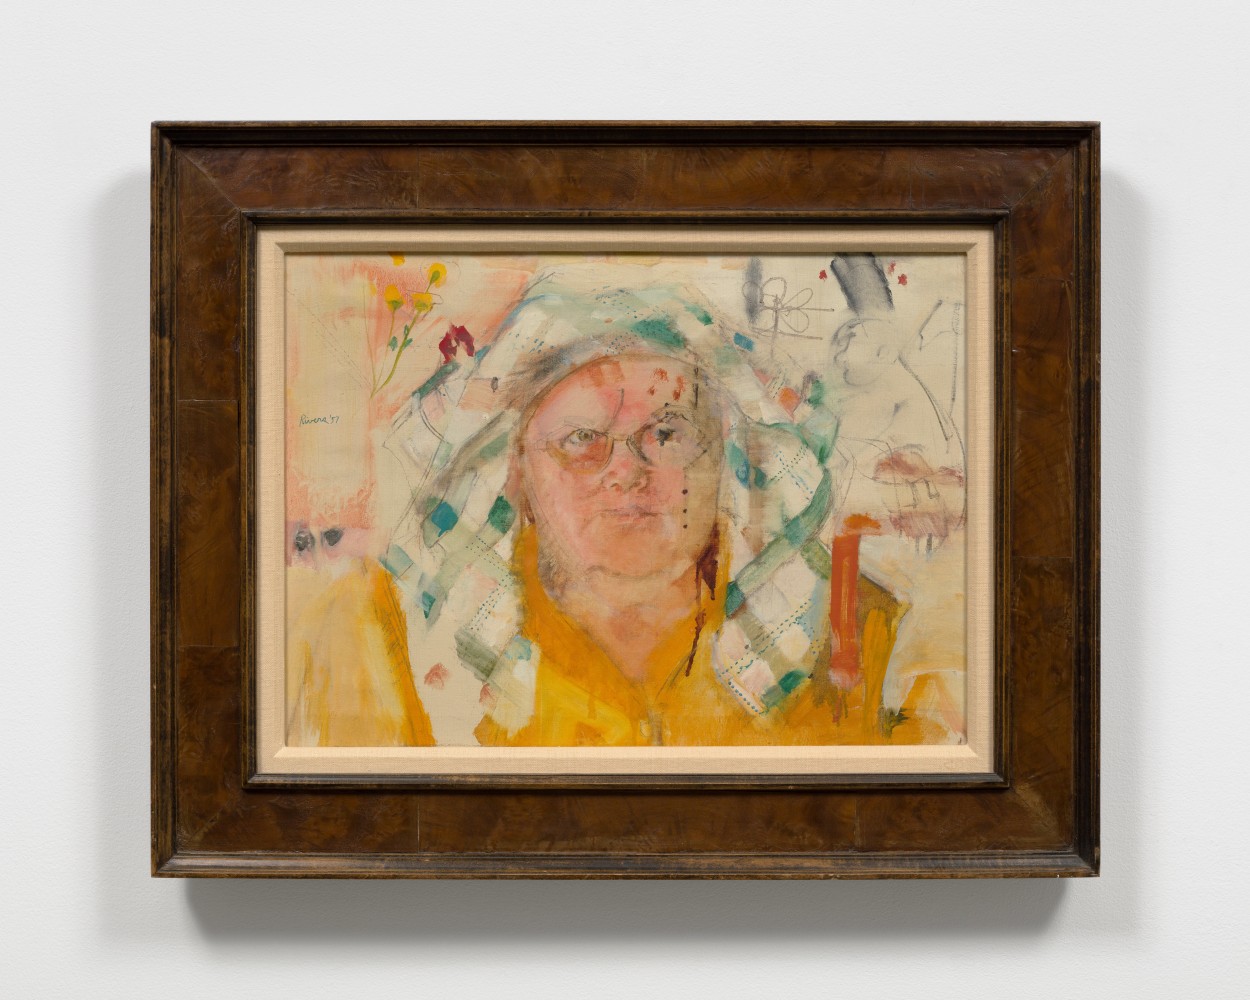 Larry Rivers

Head of a Woman (Berdie), 1957

oil on canvas&amp;nbsp;
15 x 21 in. / 38.1 x 53.34 cm&amp;nbsp;